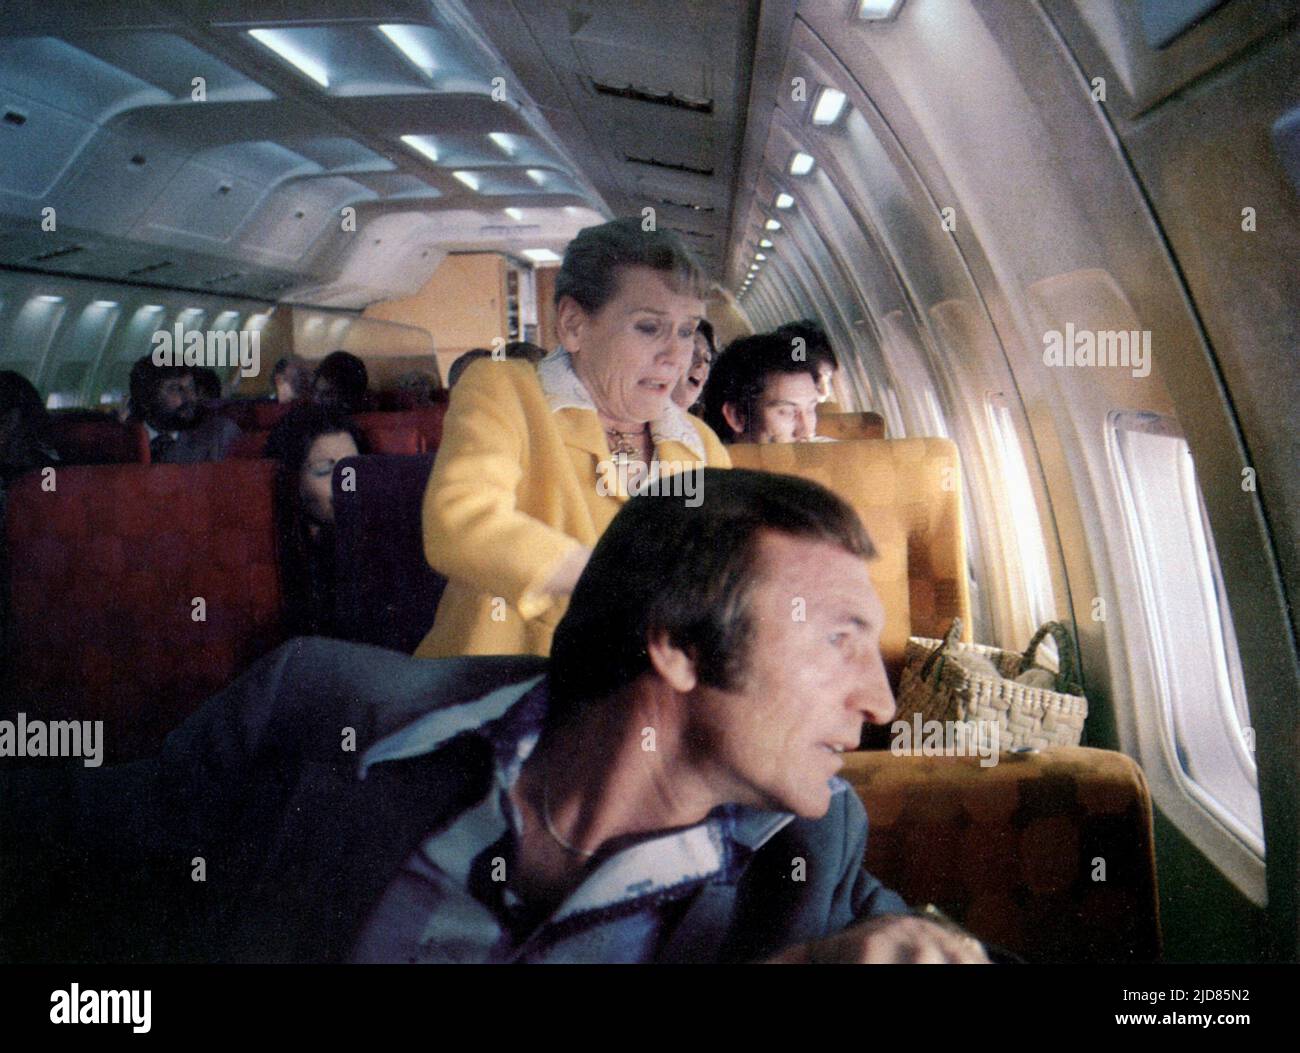 AIRCRAFT PASSENGERS, THE BERMUDA TRIANGLE, 1979, Stock Photo